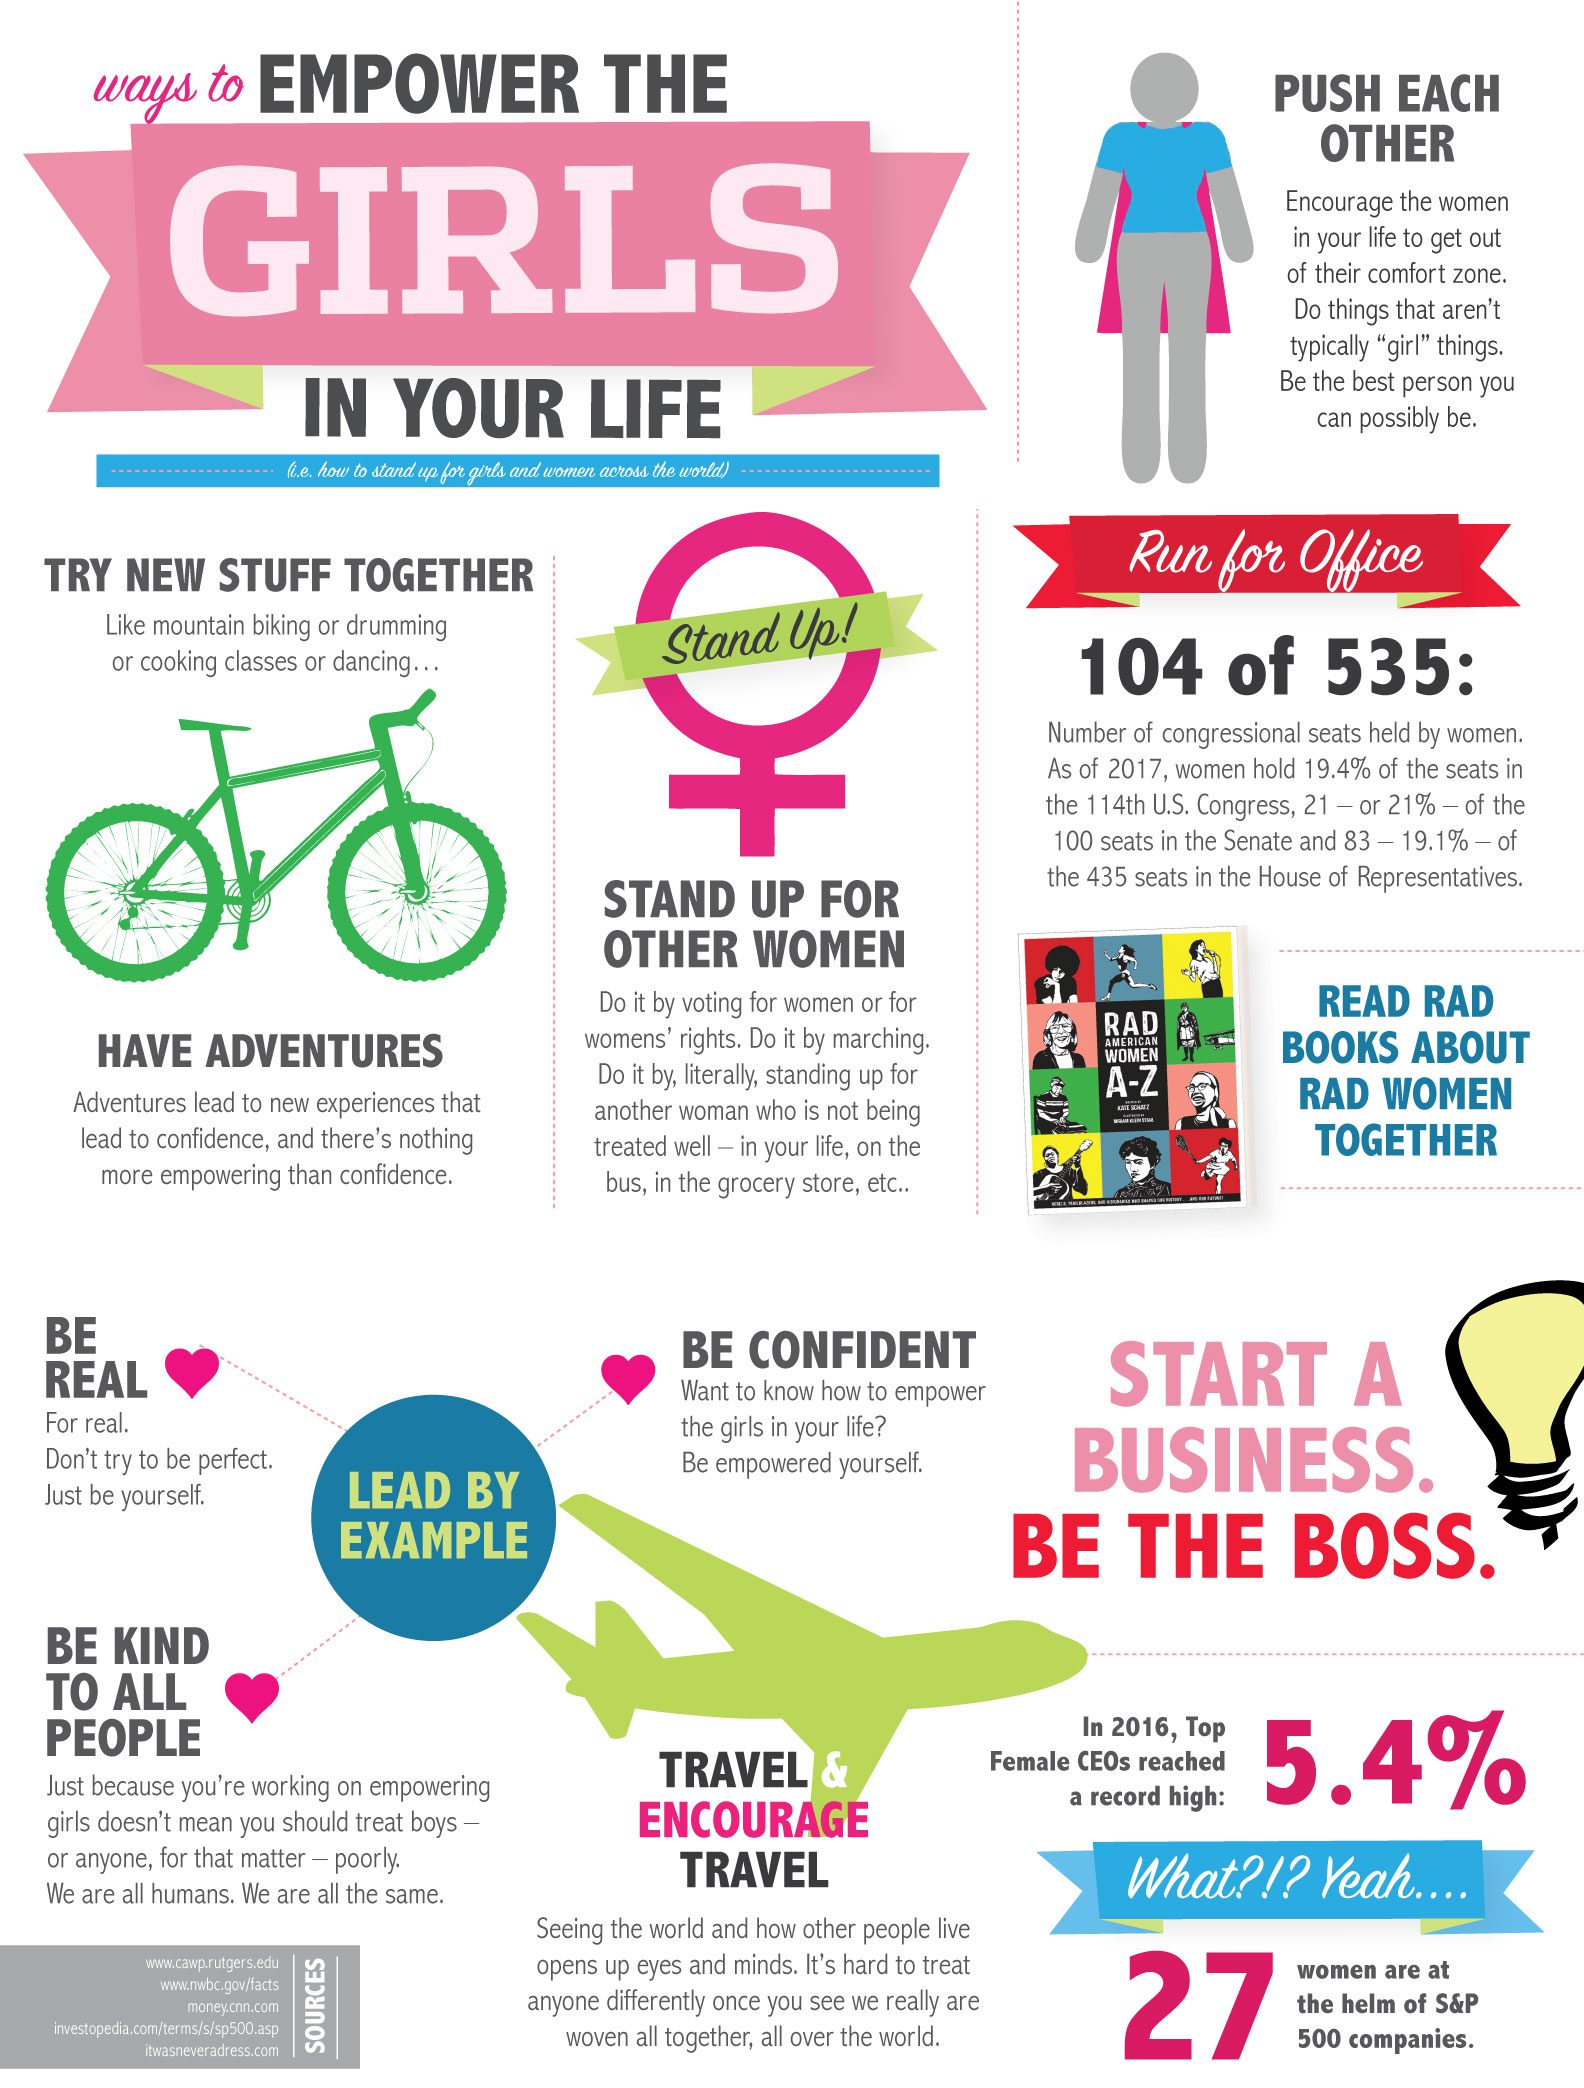 Infographic: Ways to Empower Girls